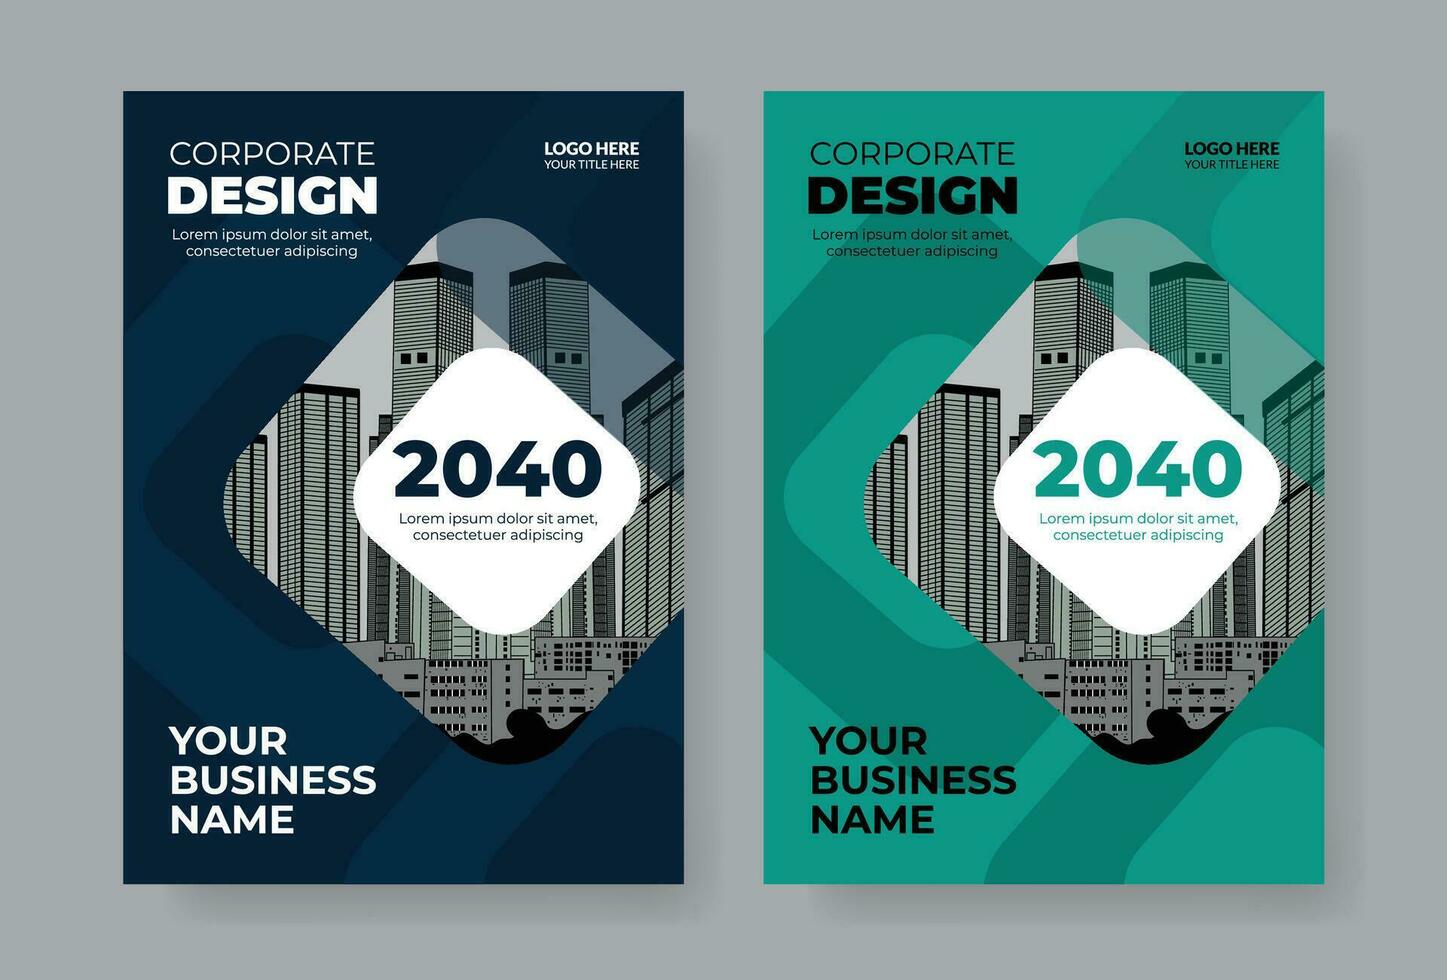 Corporate Book Cover Design Template in A4 size, annual report, poster, Corporate Presentation, magazine cover, banner, website, business portfolio vector